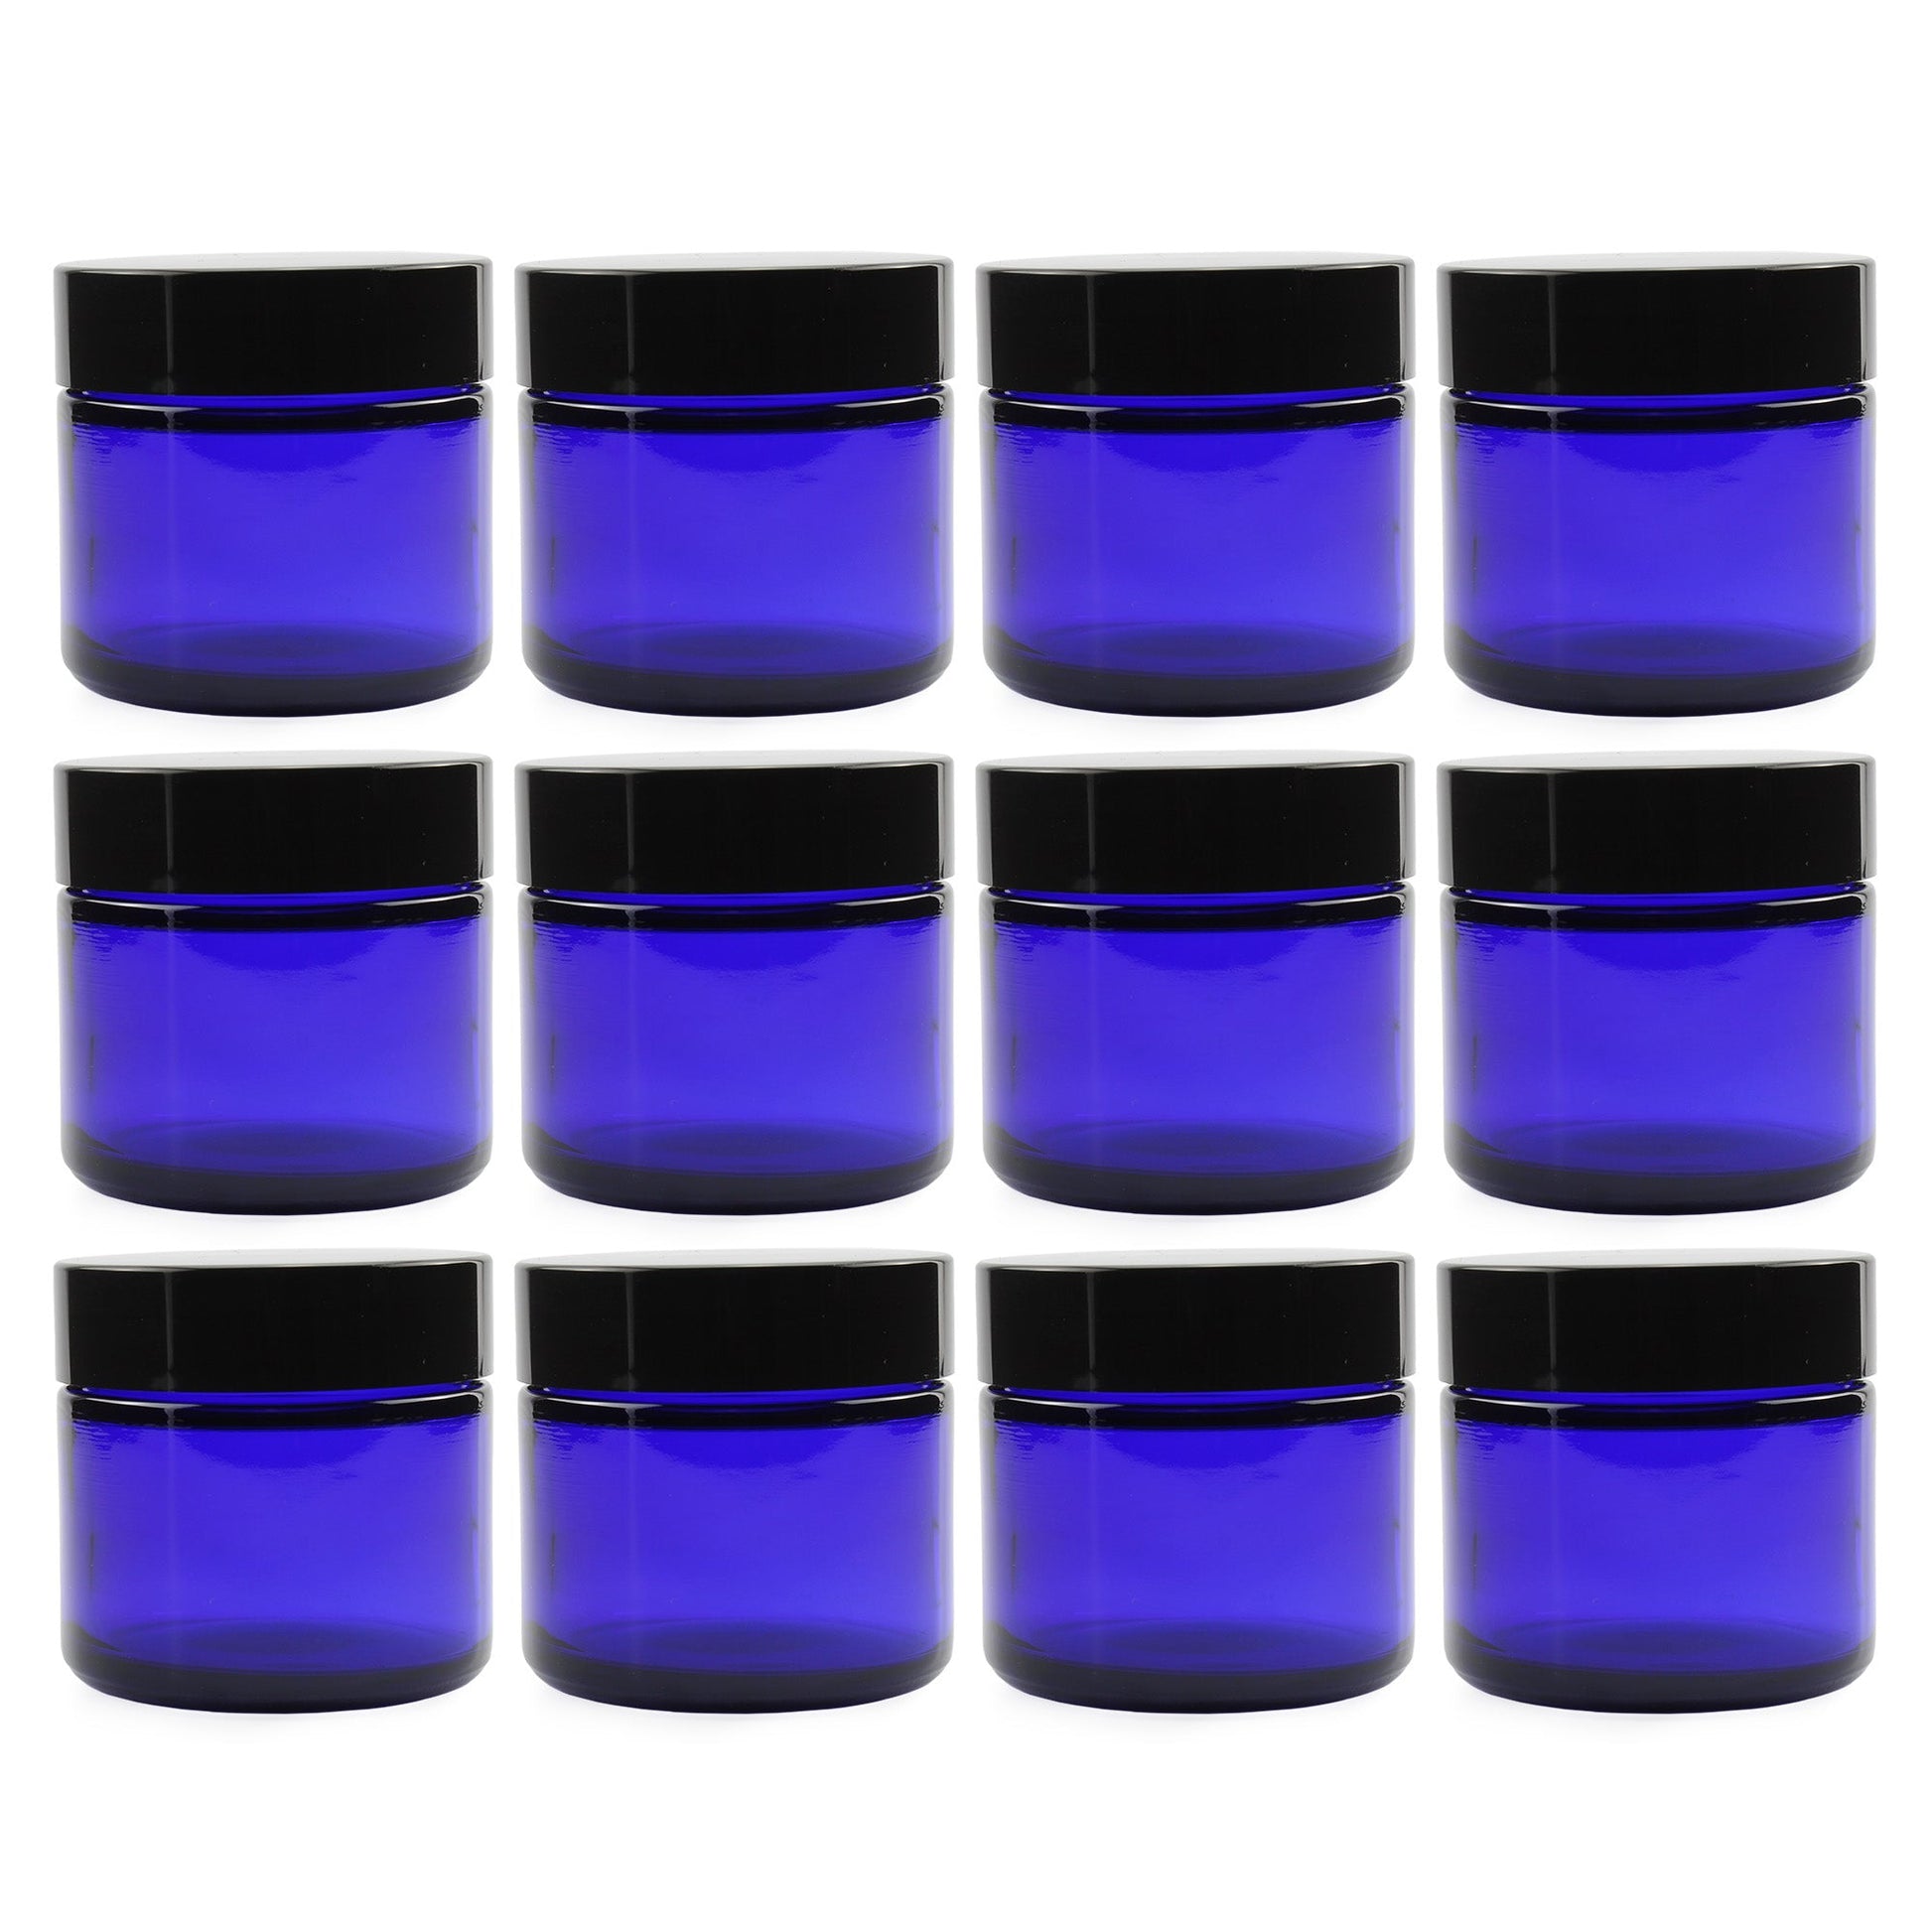 2oz Cobalt Blue Glass Cosmetic Jars (12-Pack) - sh1196cb0318mnw